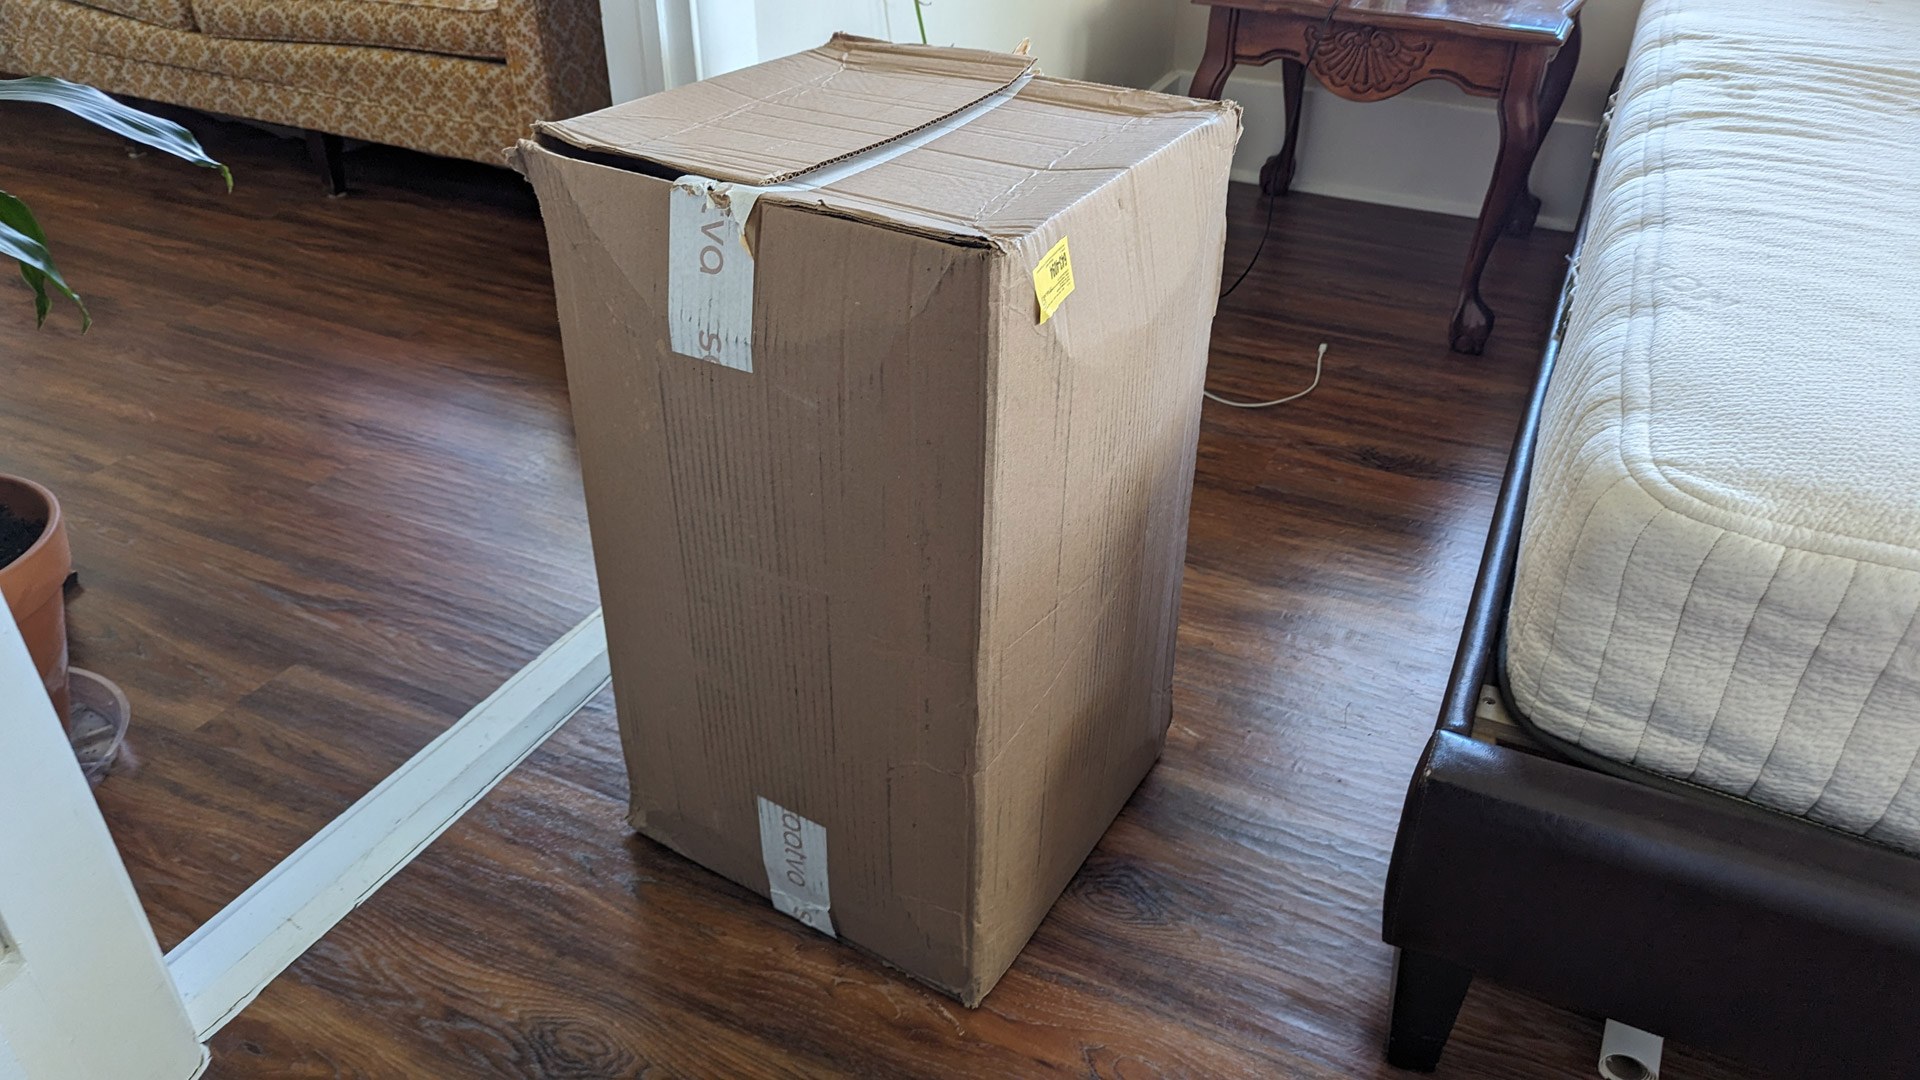 The Saatva Graphite Memory Foam Mattress Topper in its delivery box